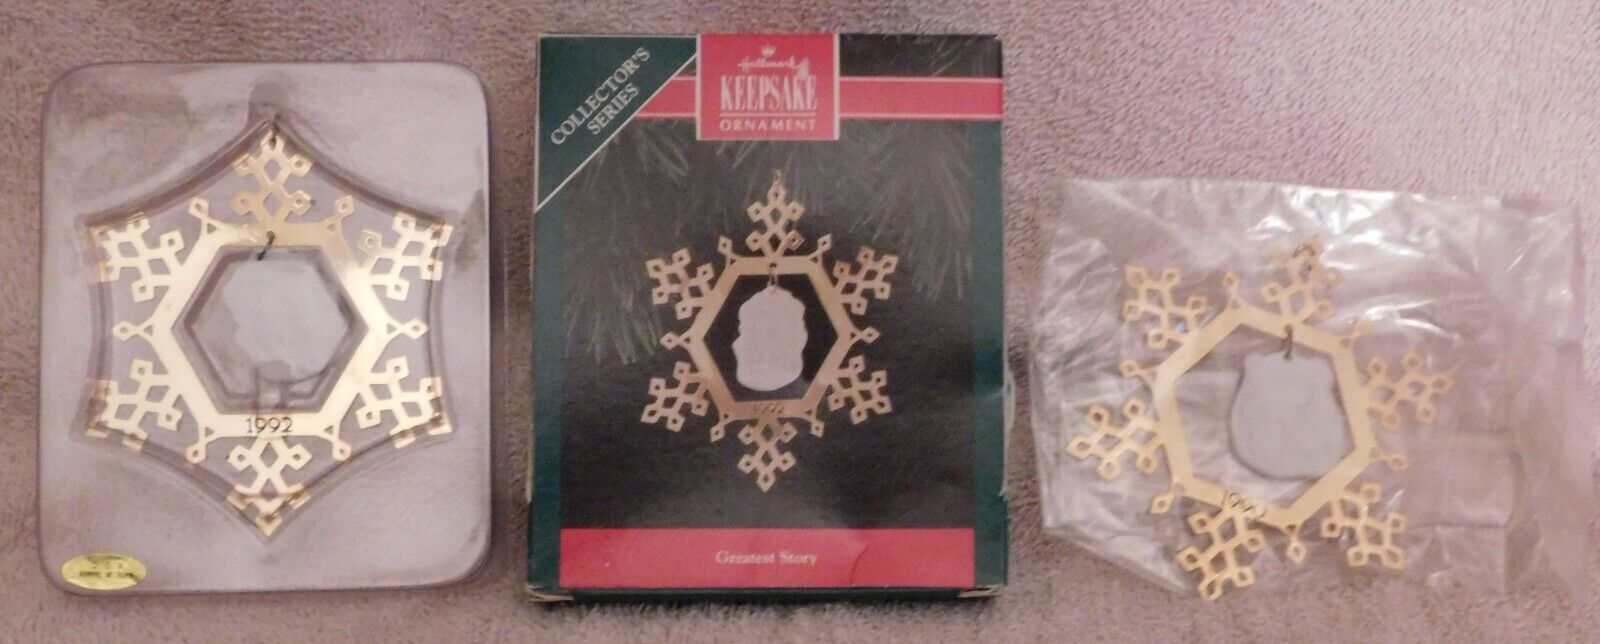 1990 & 1992 Hallmark Greatest Story Christmas Ornaments W/Box  Lot NICE